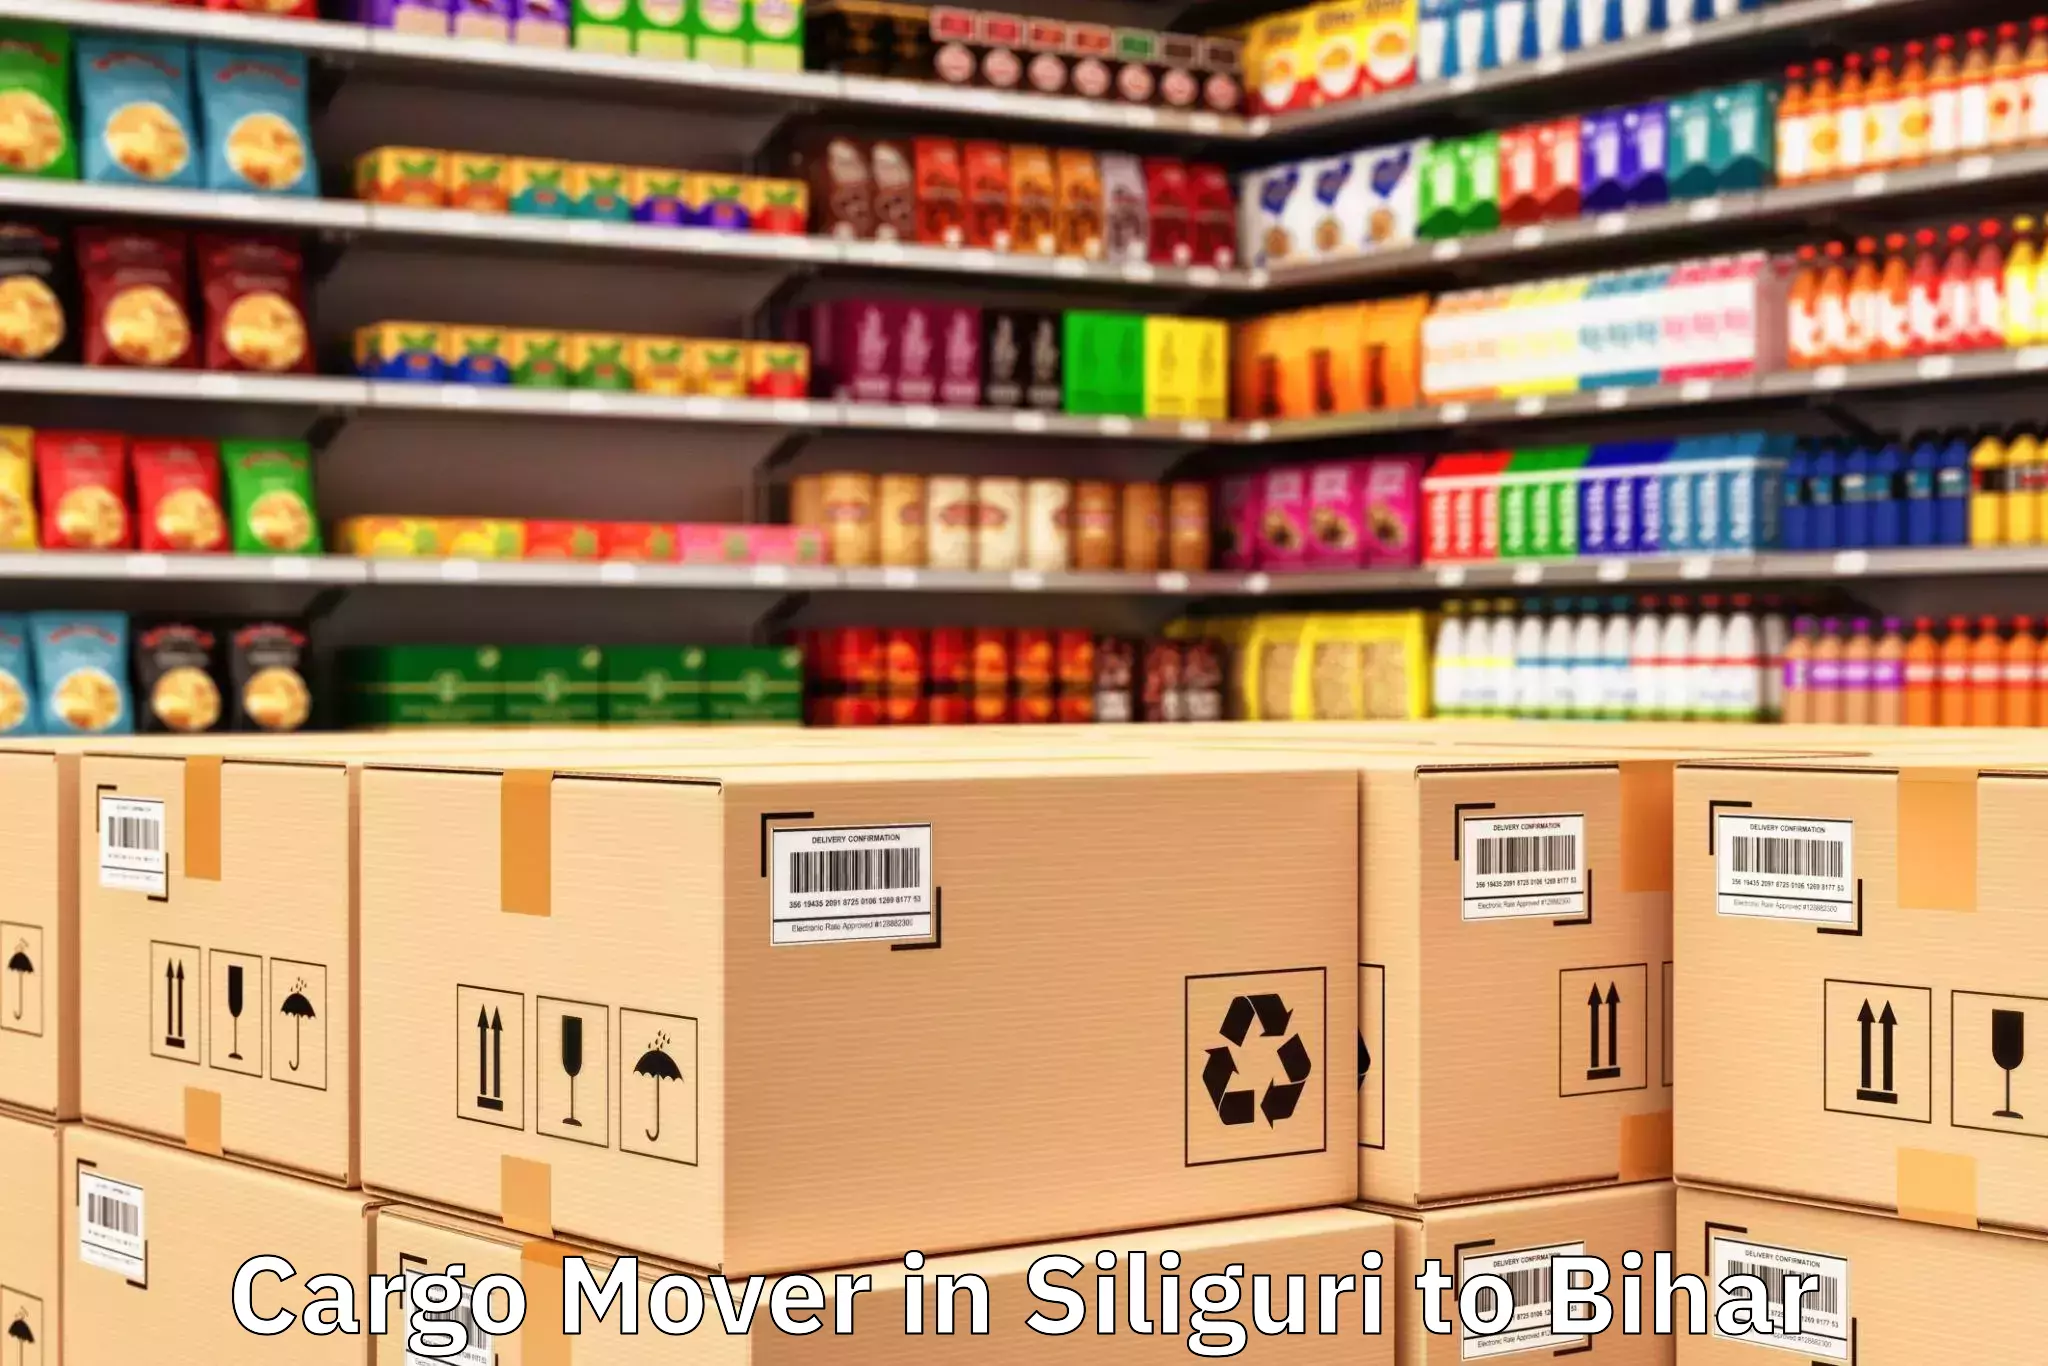 Top Siliguri to Jiwdhara Cargo Mover Available